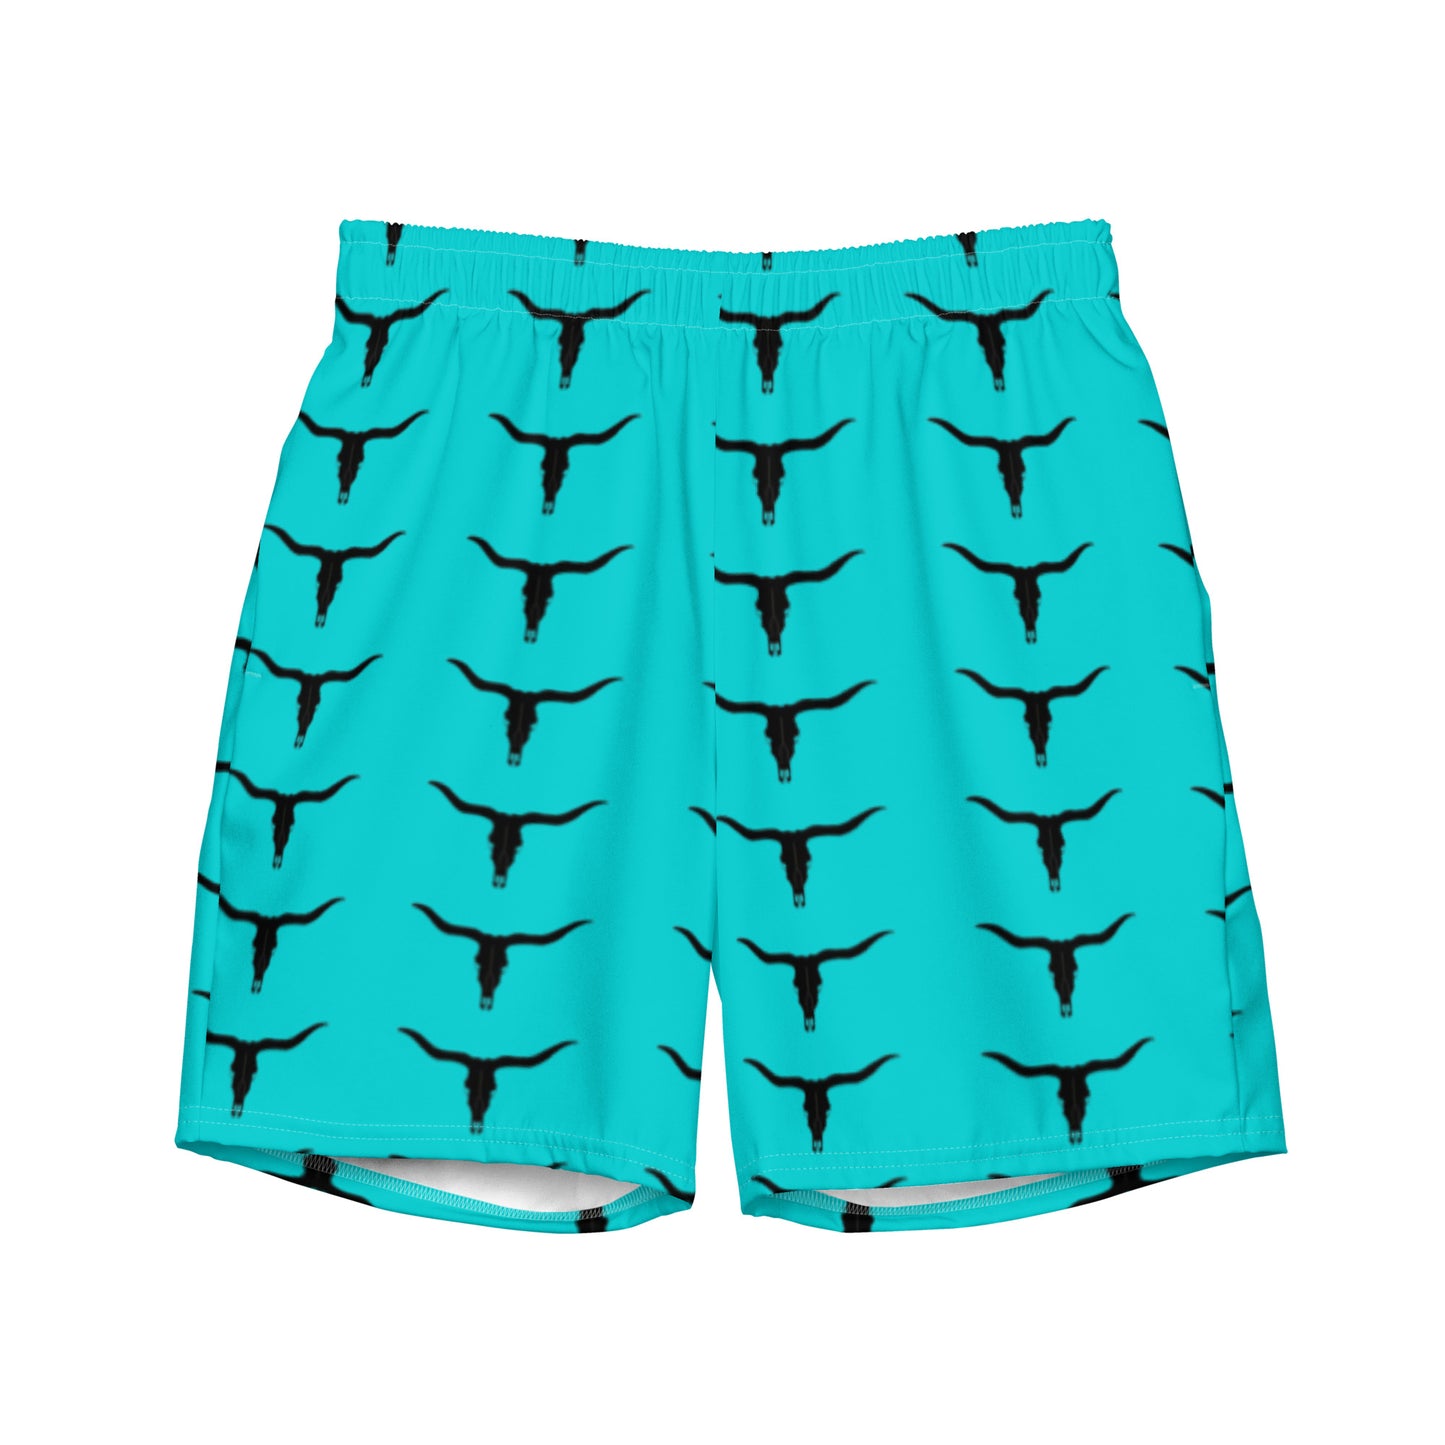 Men's Turquoise Swim Trunks